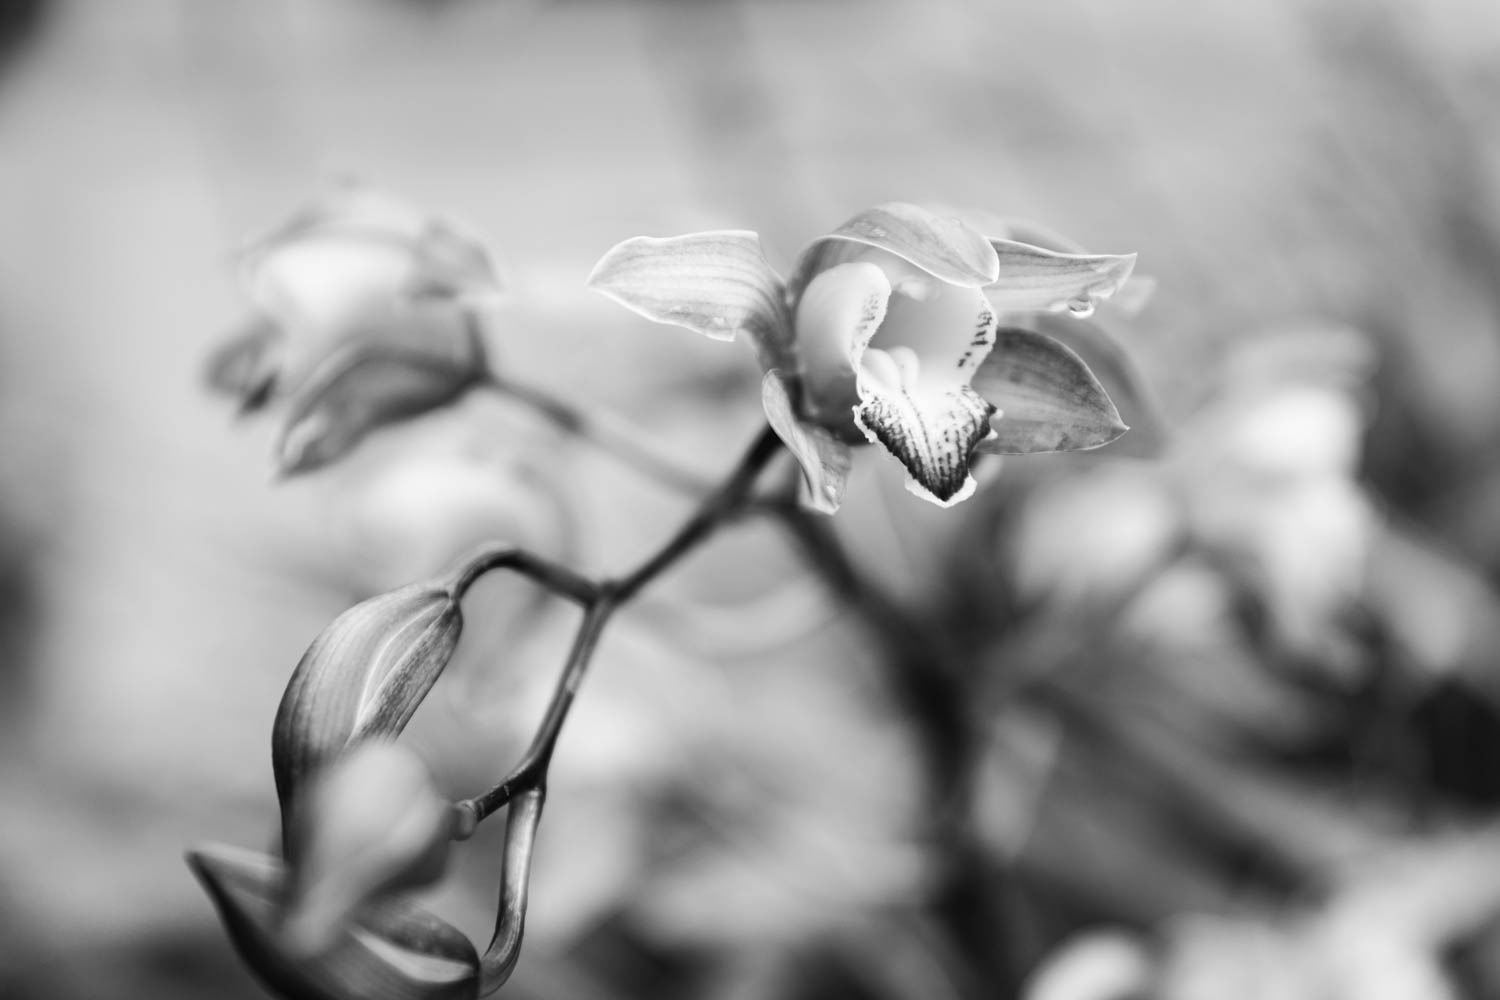 Orchid flower images monochrome study.